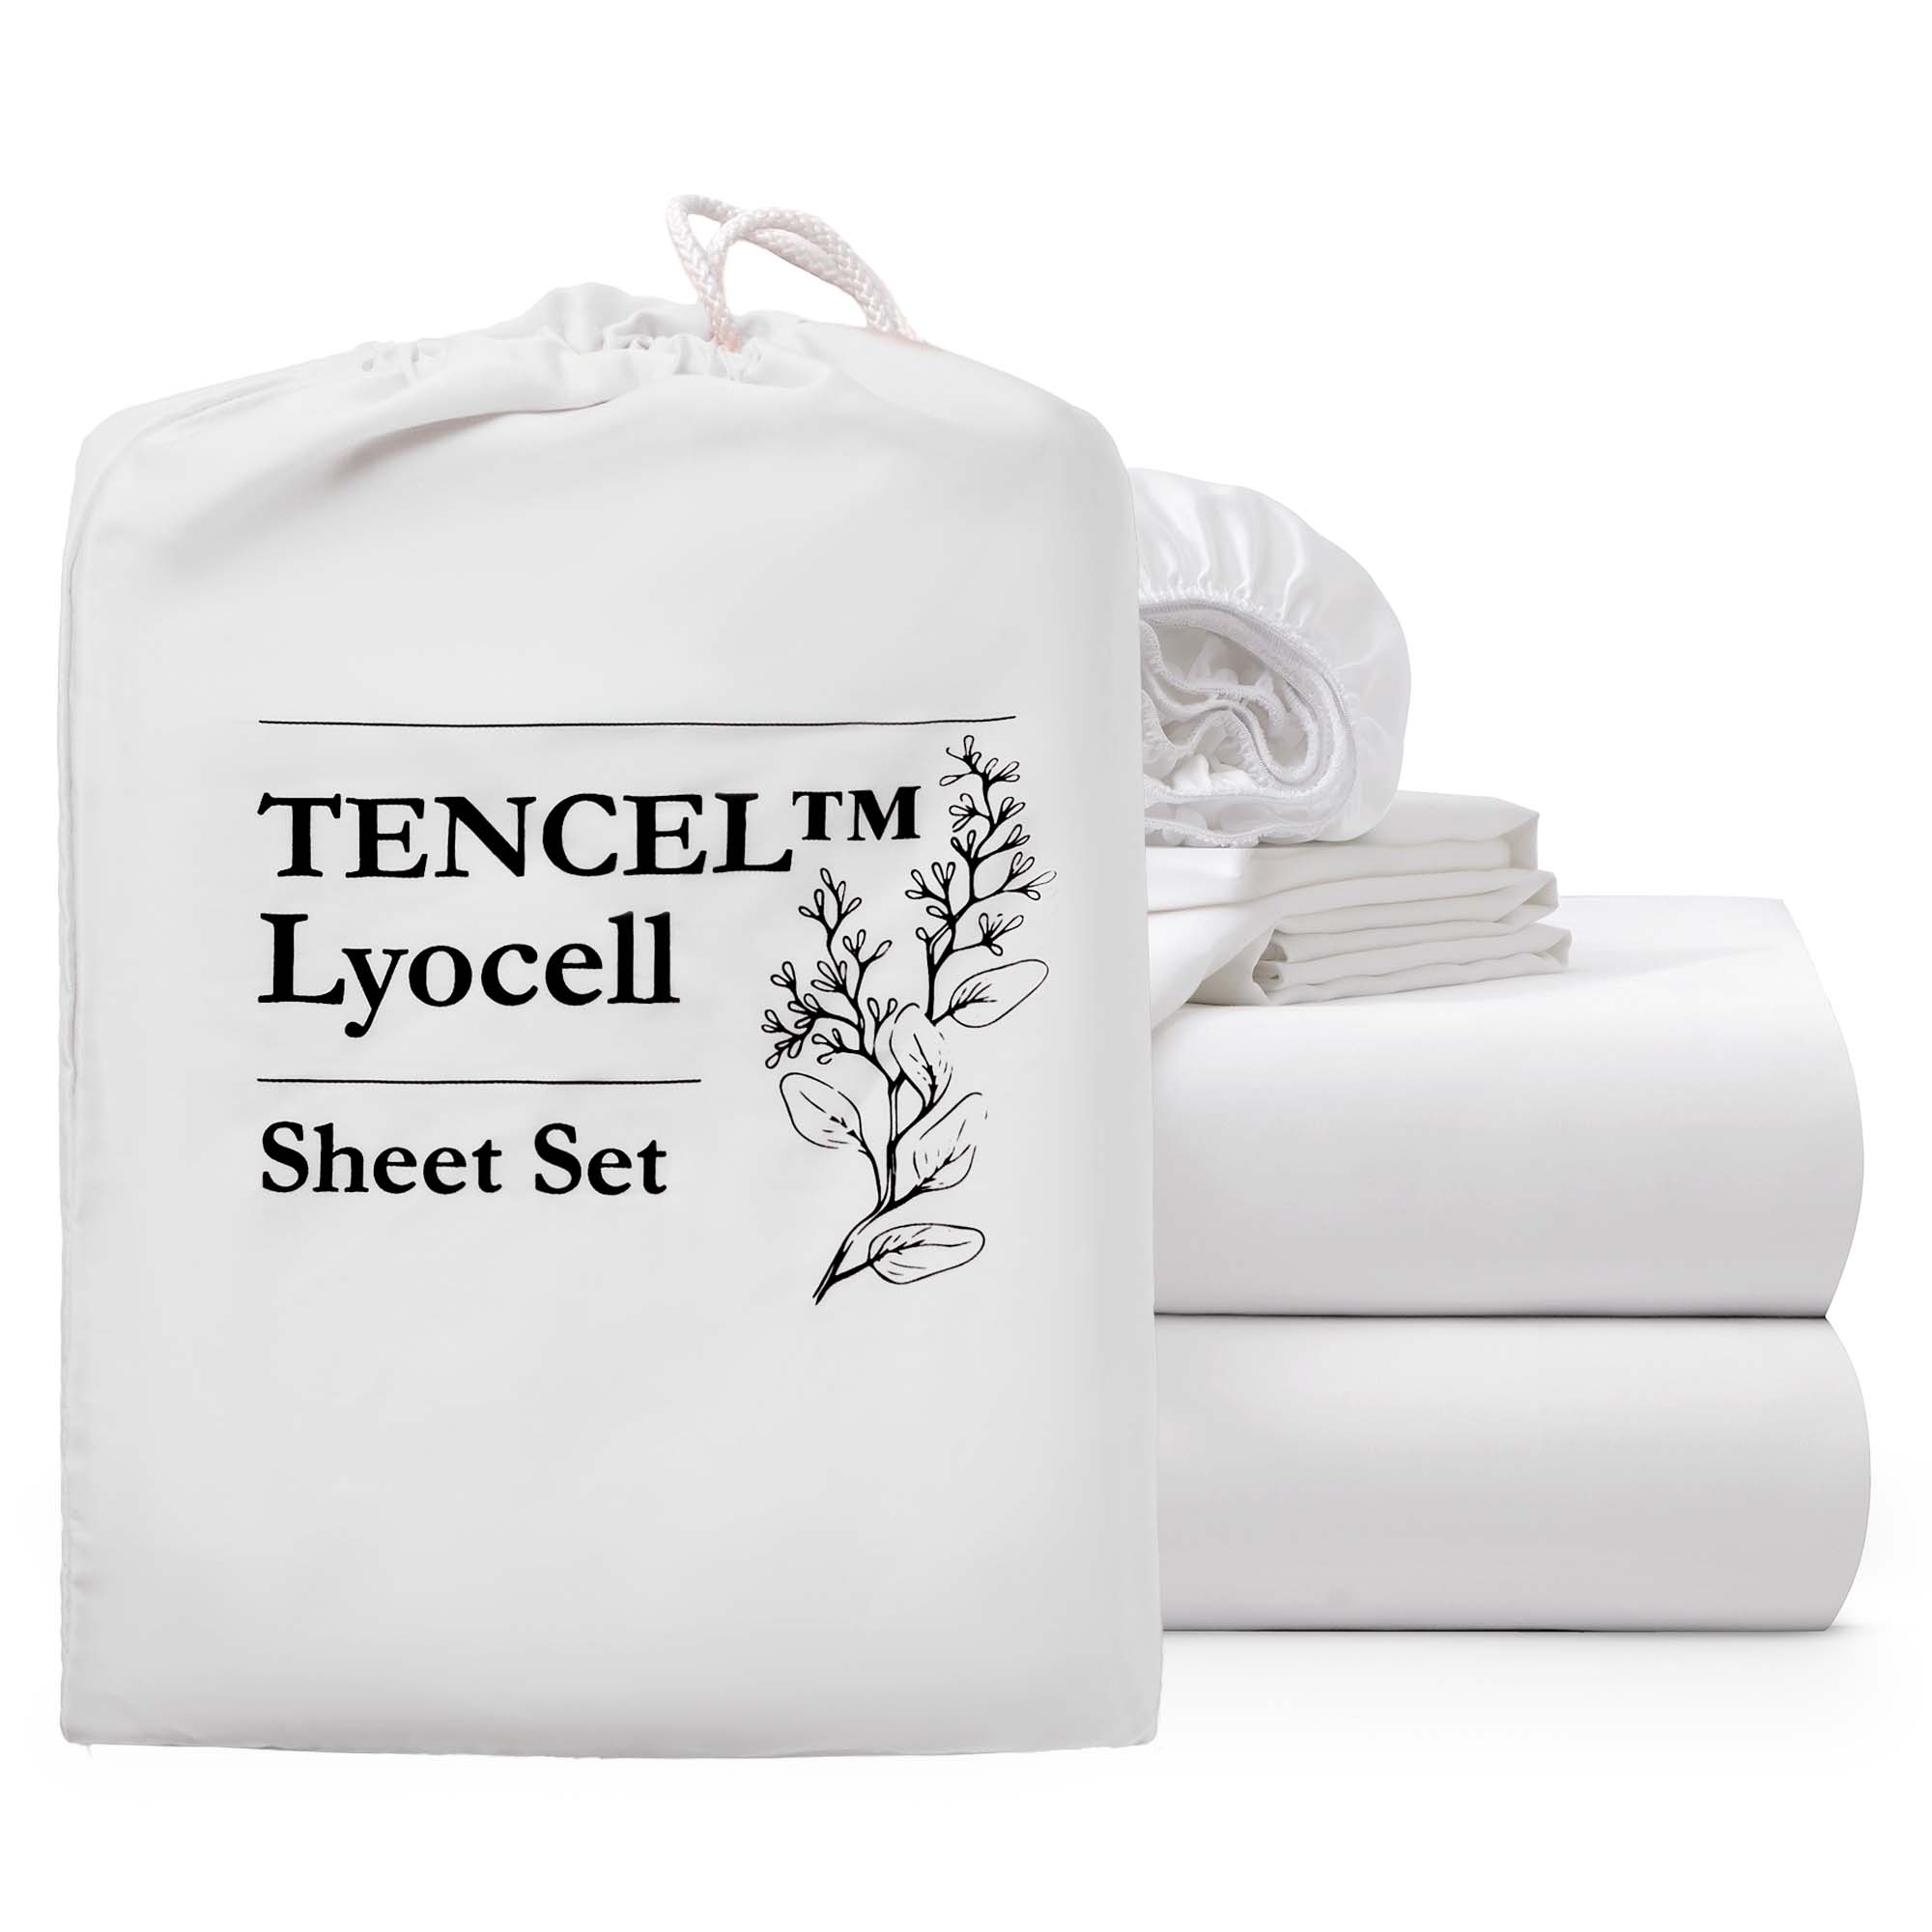 Silky Soft TENCELâ¢ Lyocell Cooling Sheet Set-Breathability And Moisture-wicking Bedding Set - Cannoli Cream, Queen